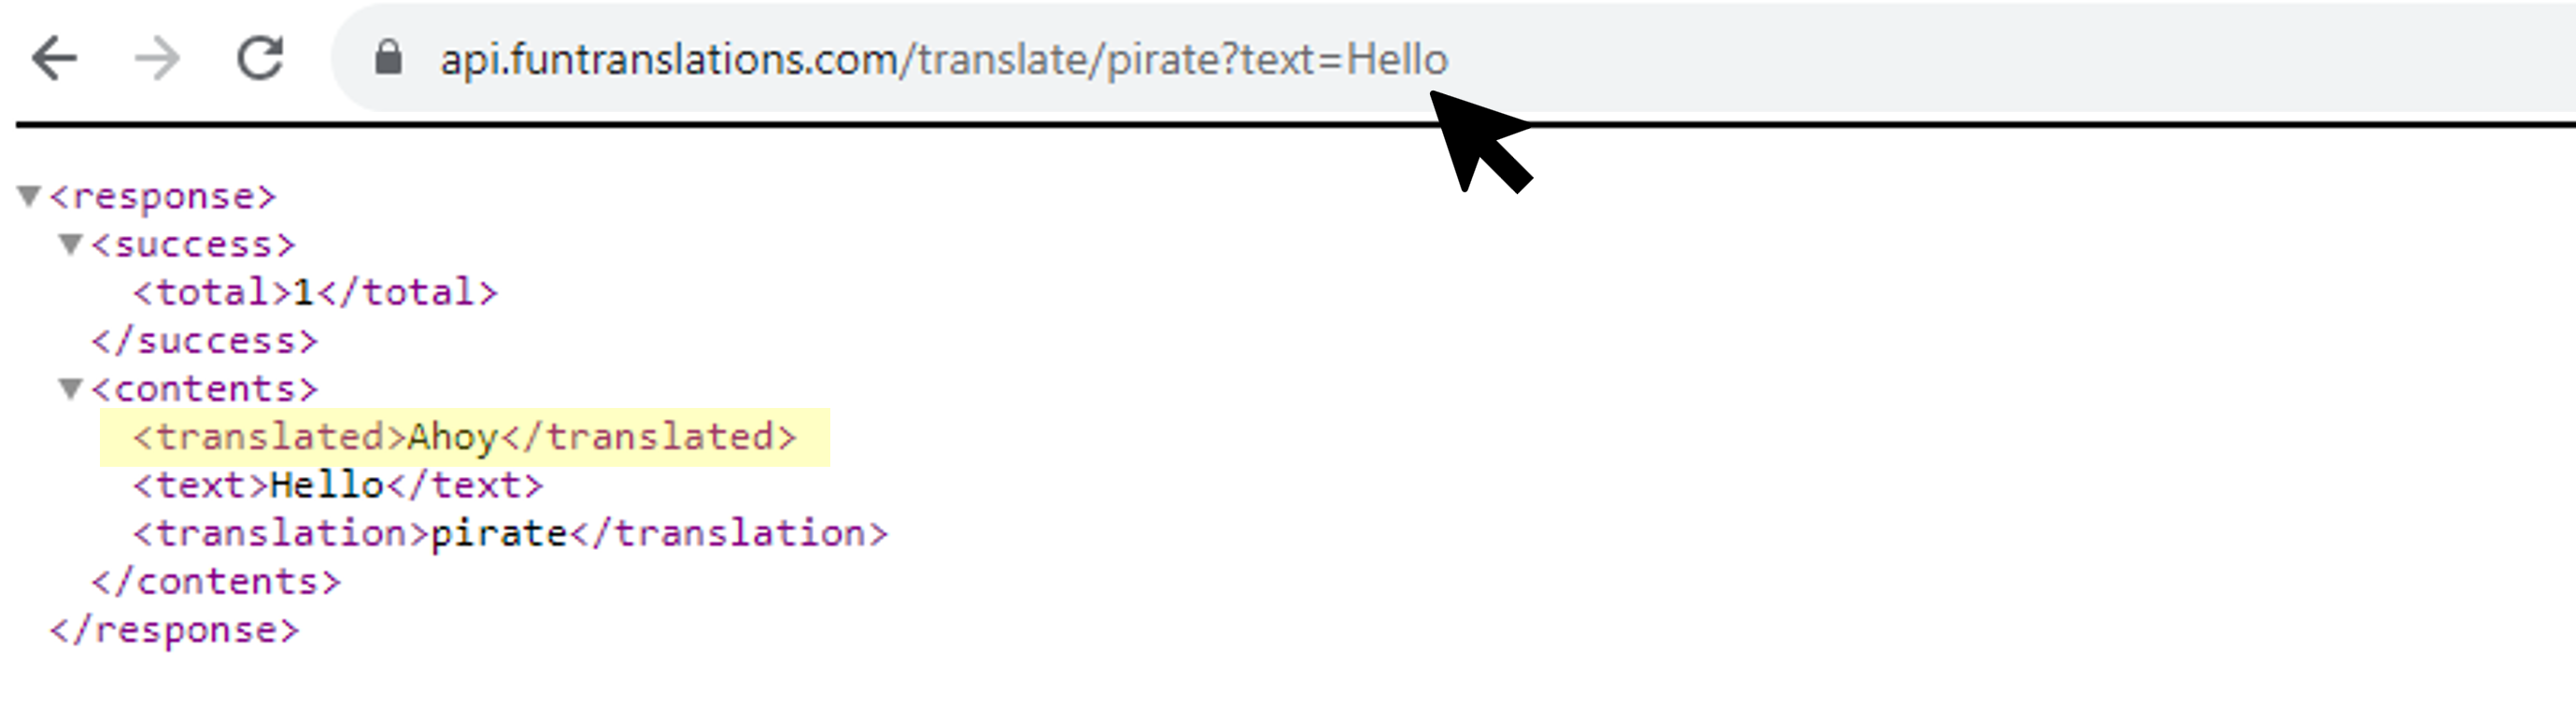 Pirate translation